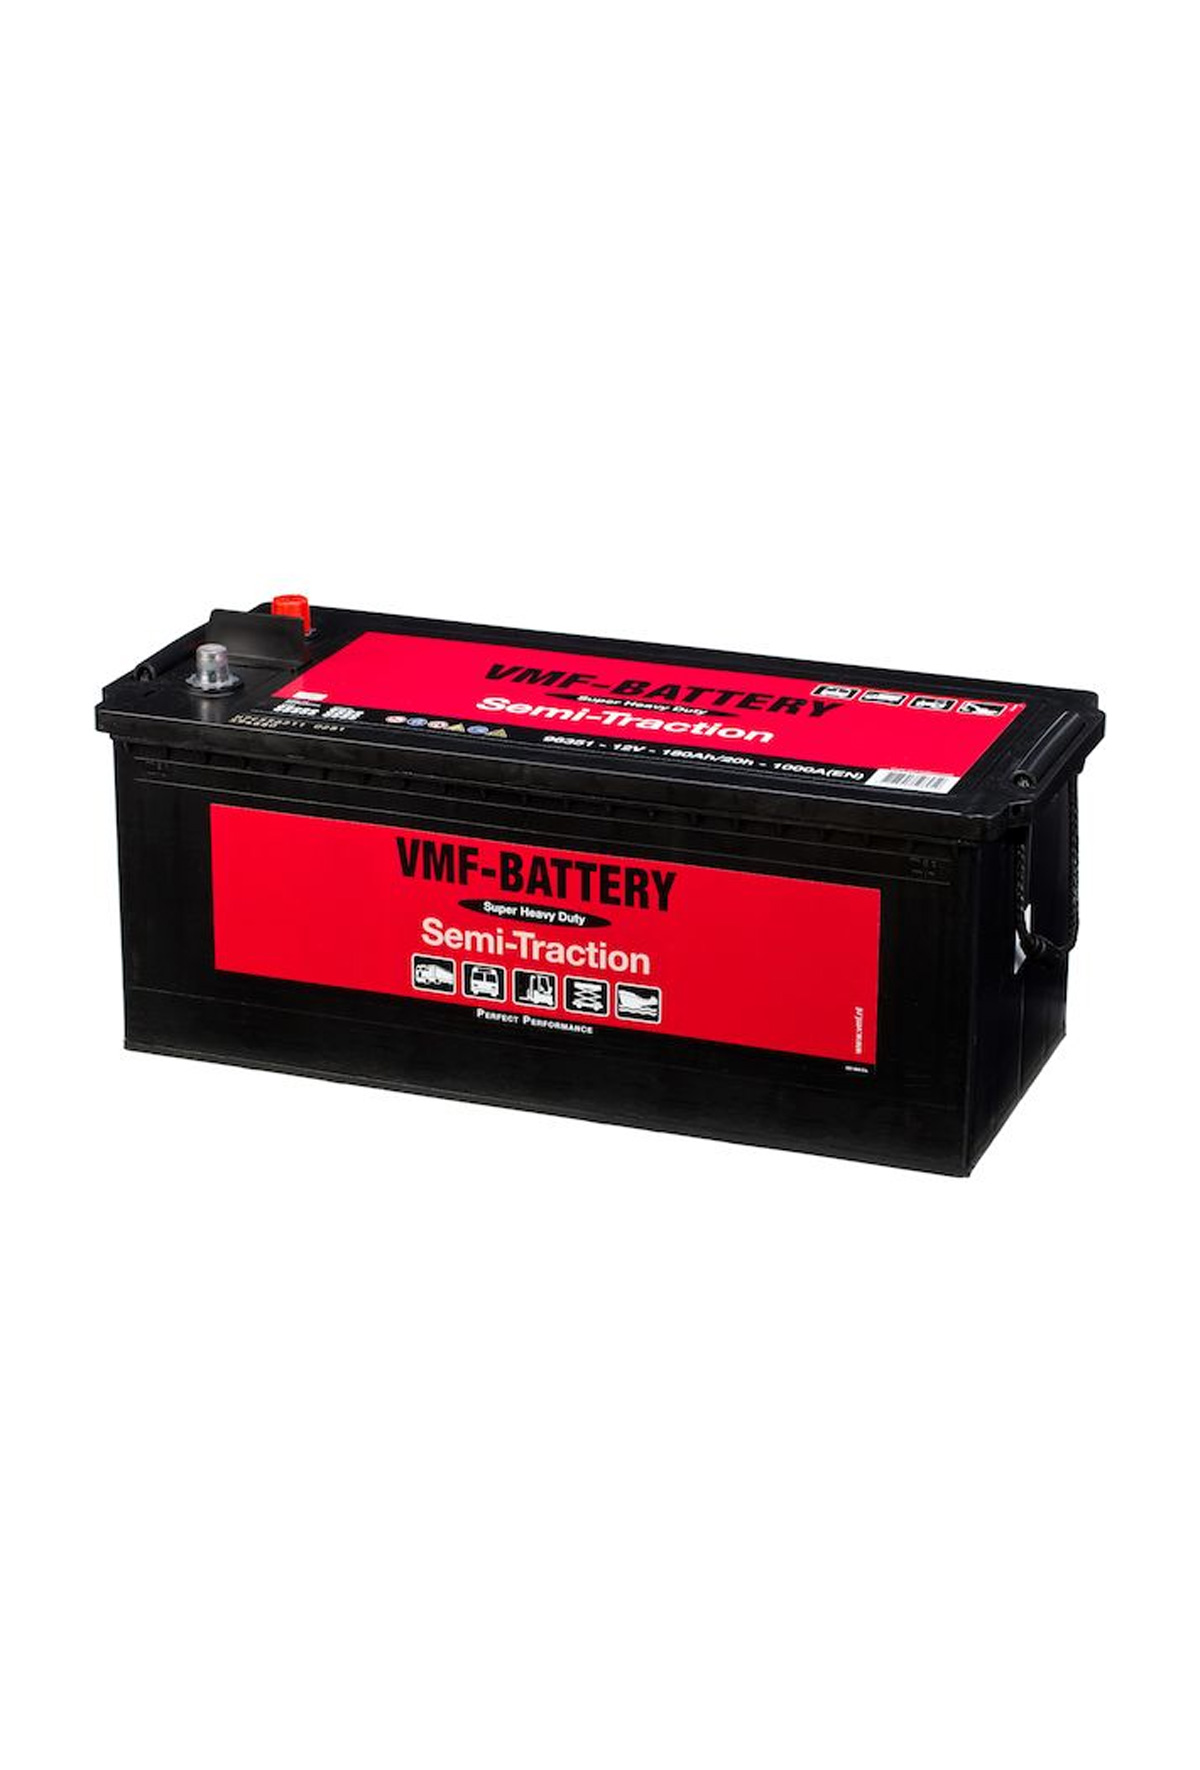 VMF 230Ah Semi tractie batterij 12V